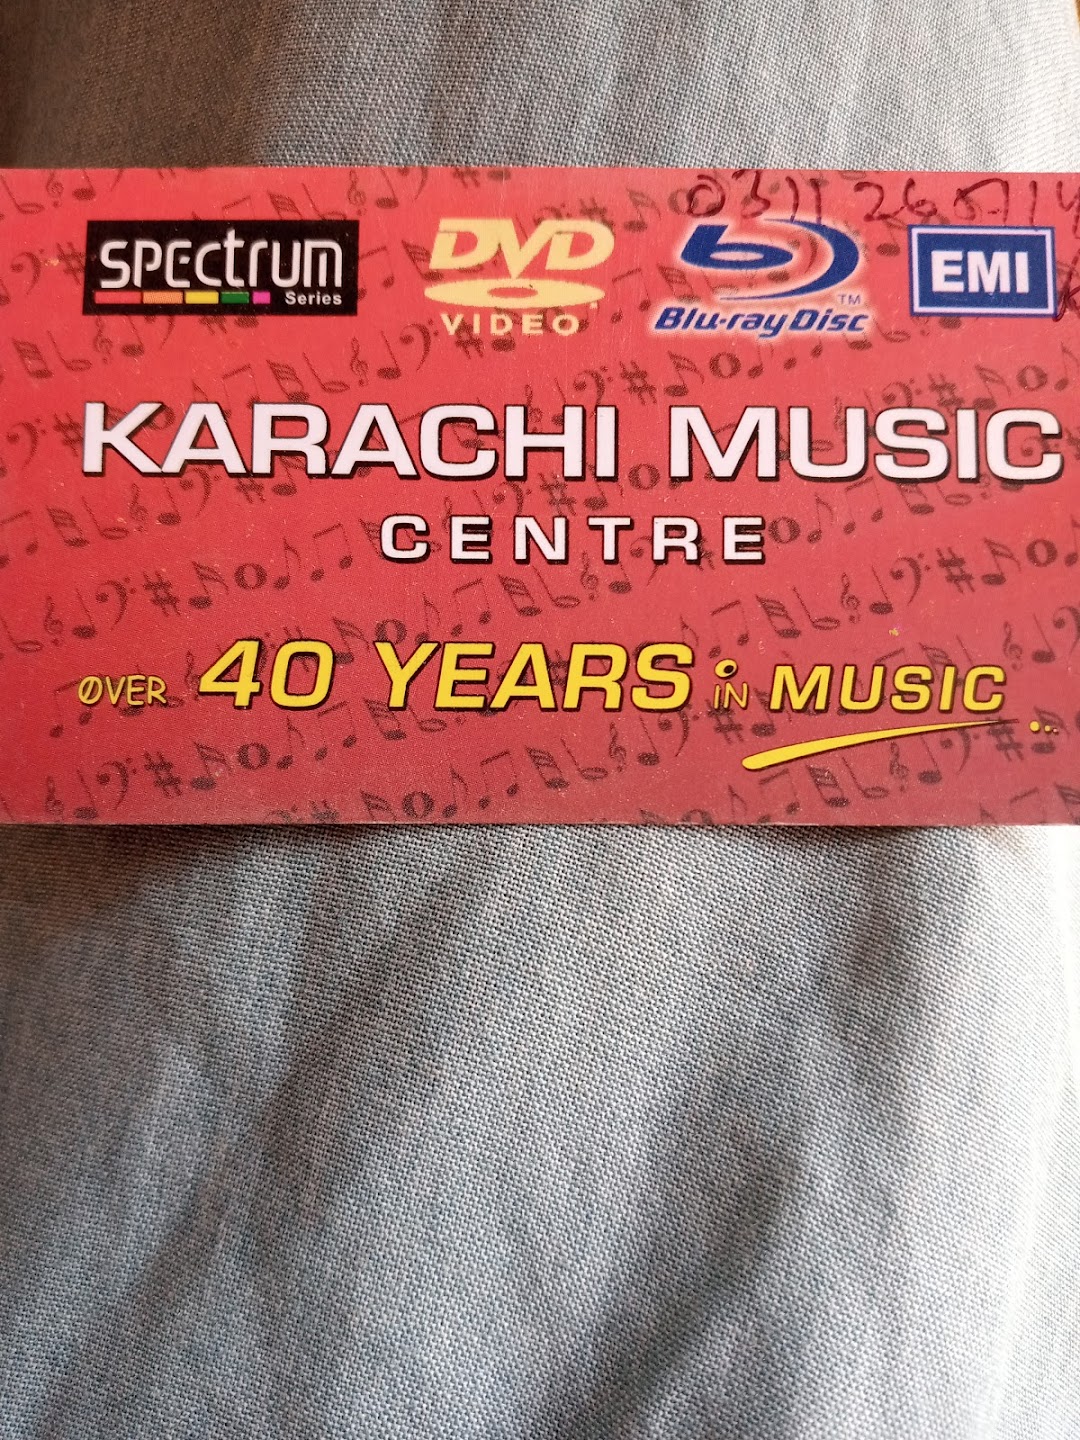 Karachi Music Center